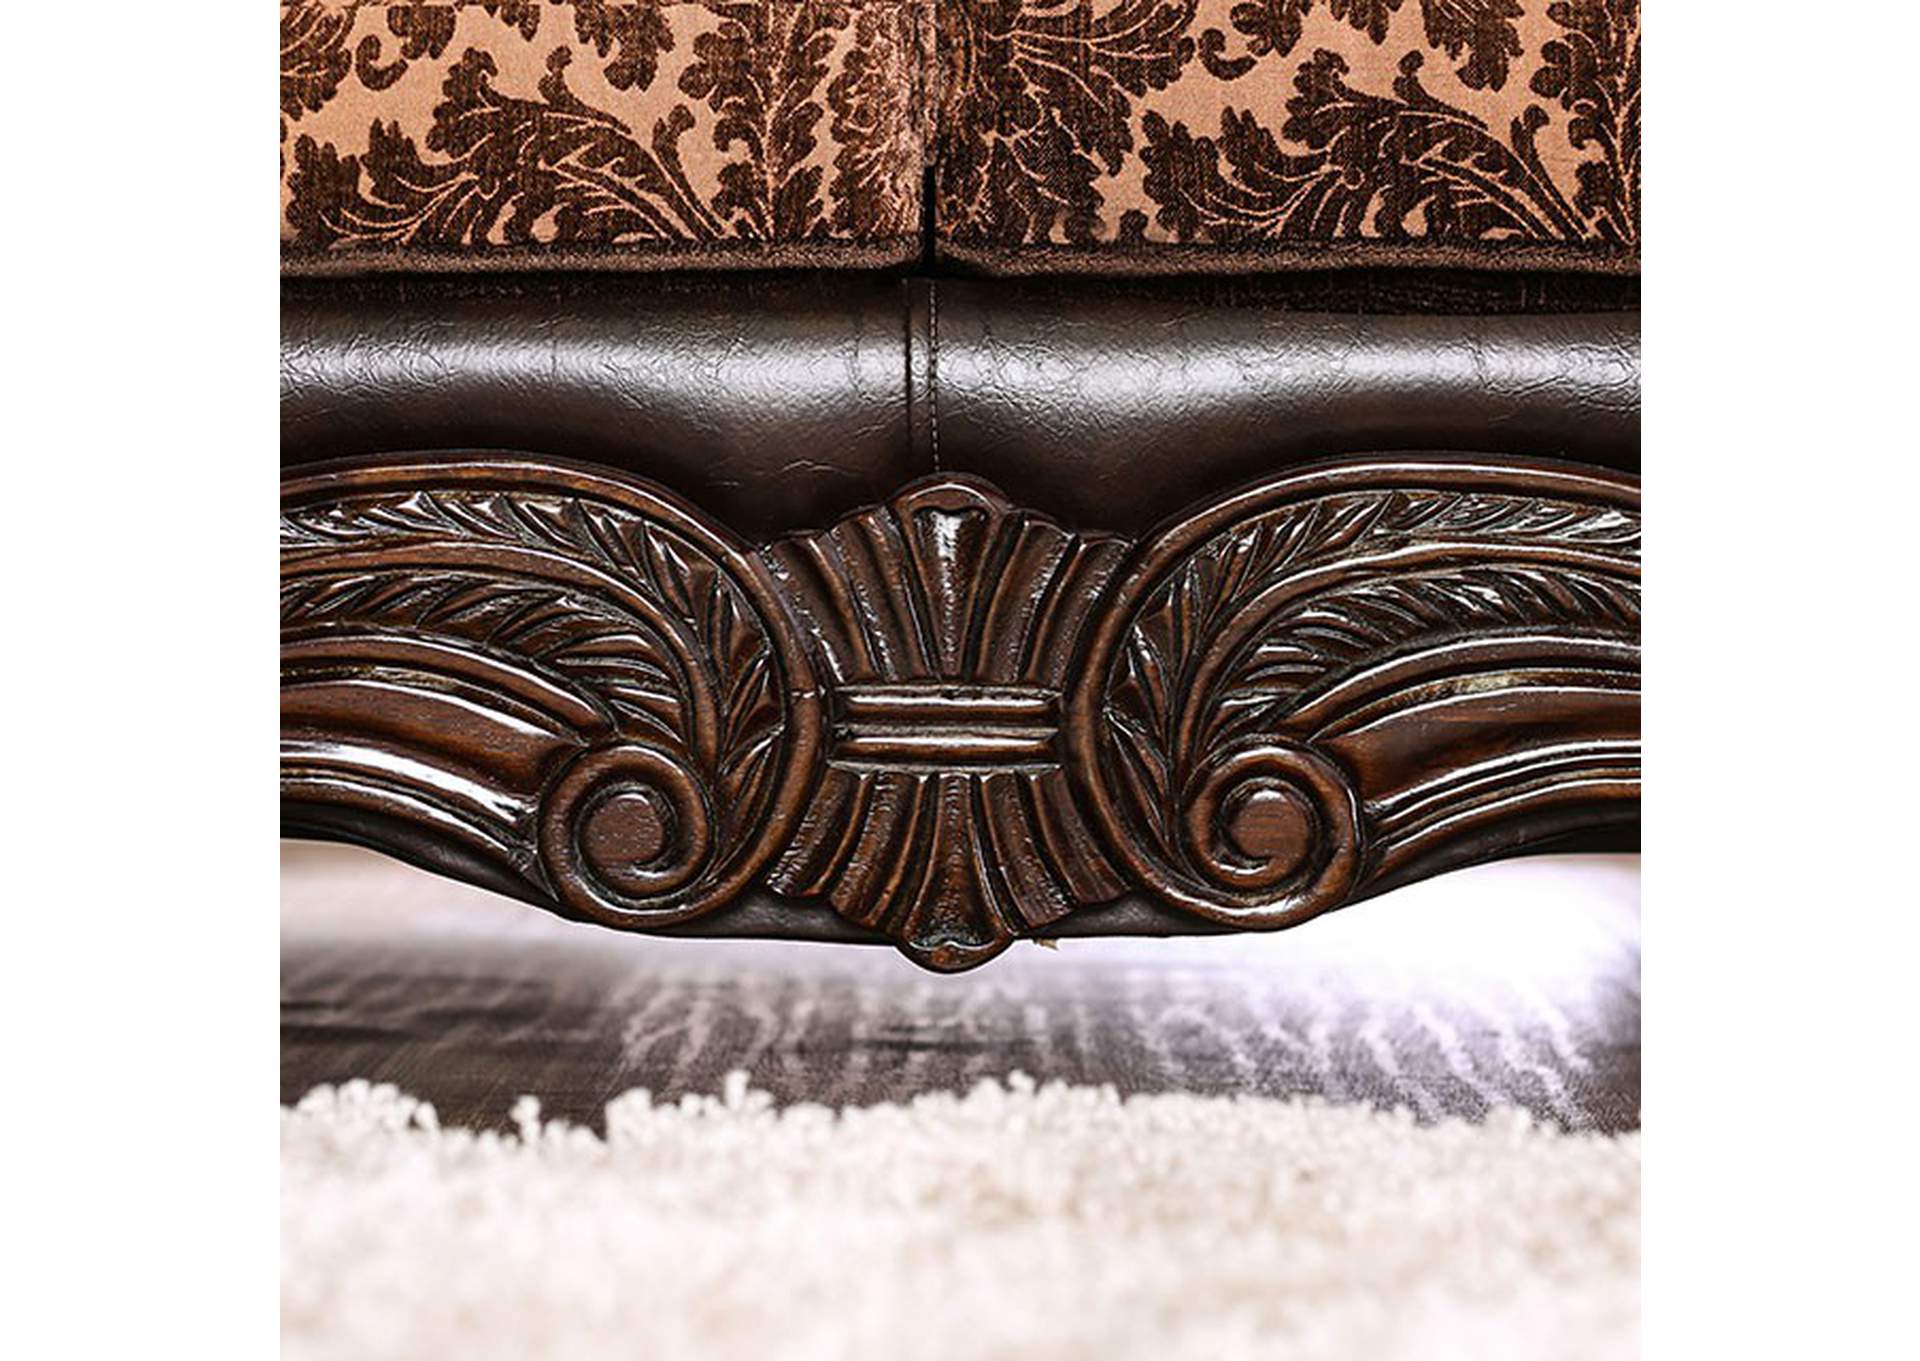 Elpis Sofa,Furniture of America